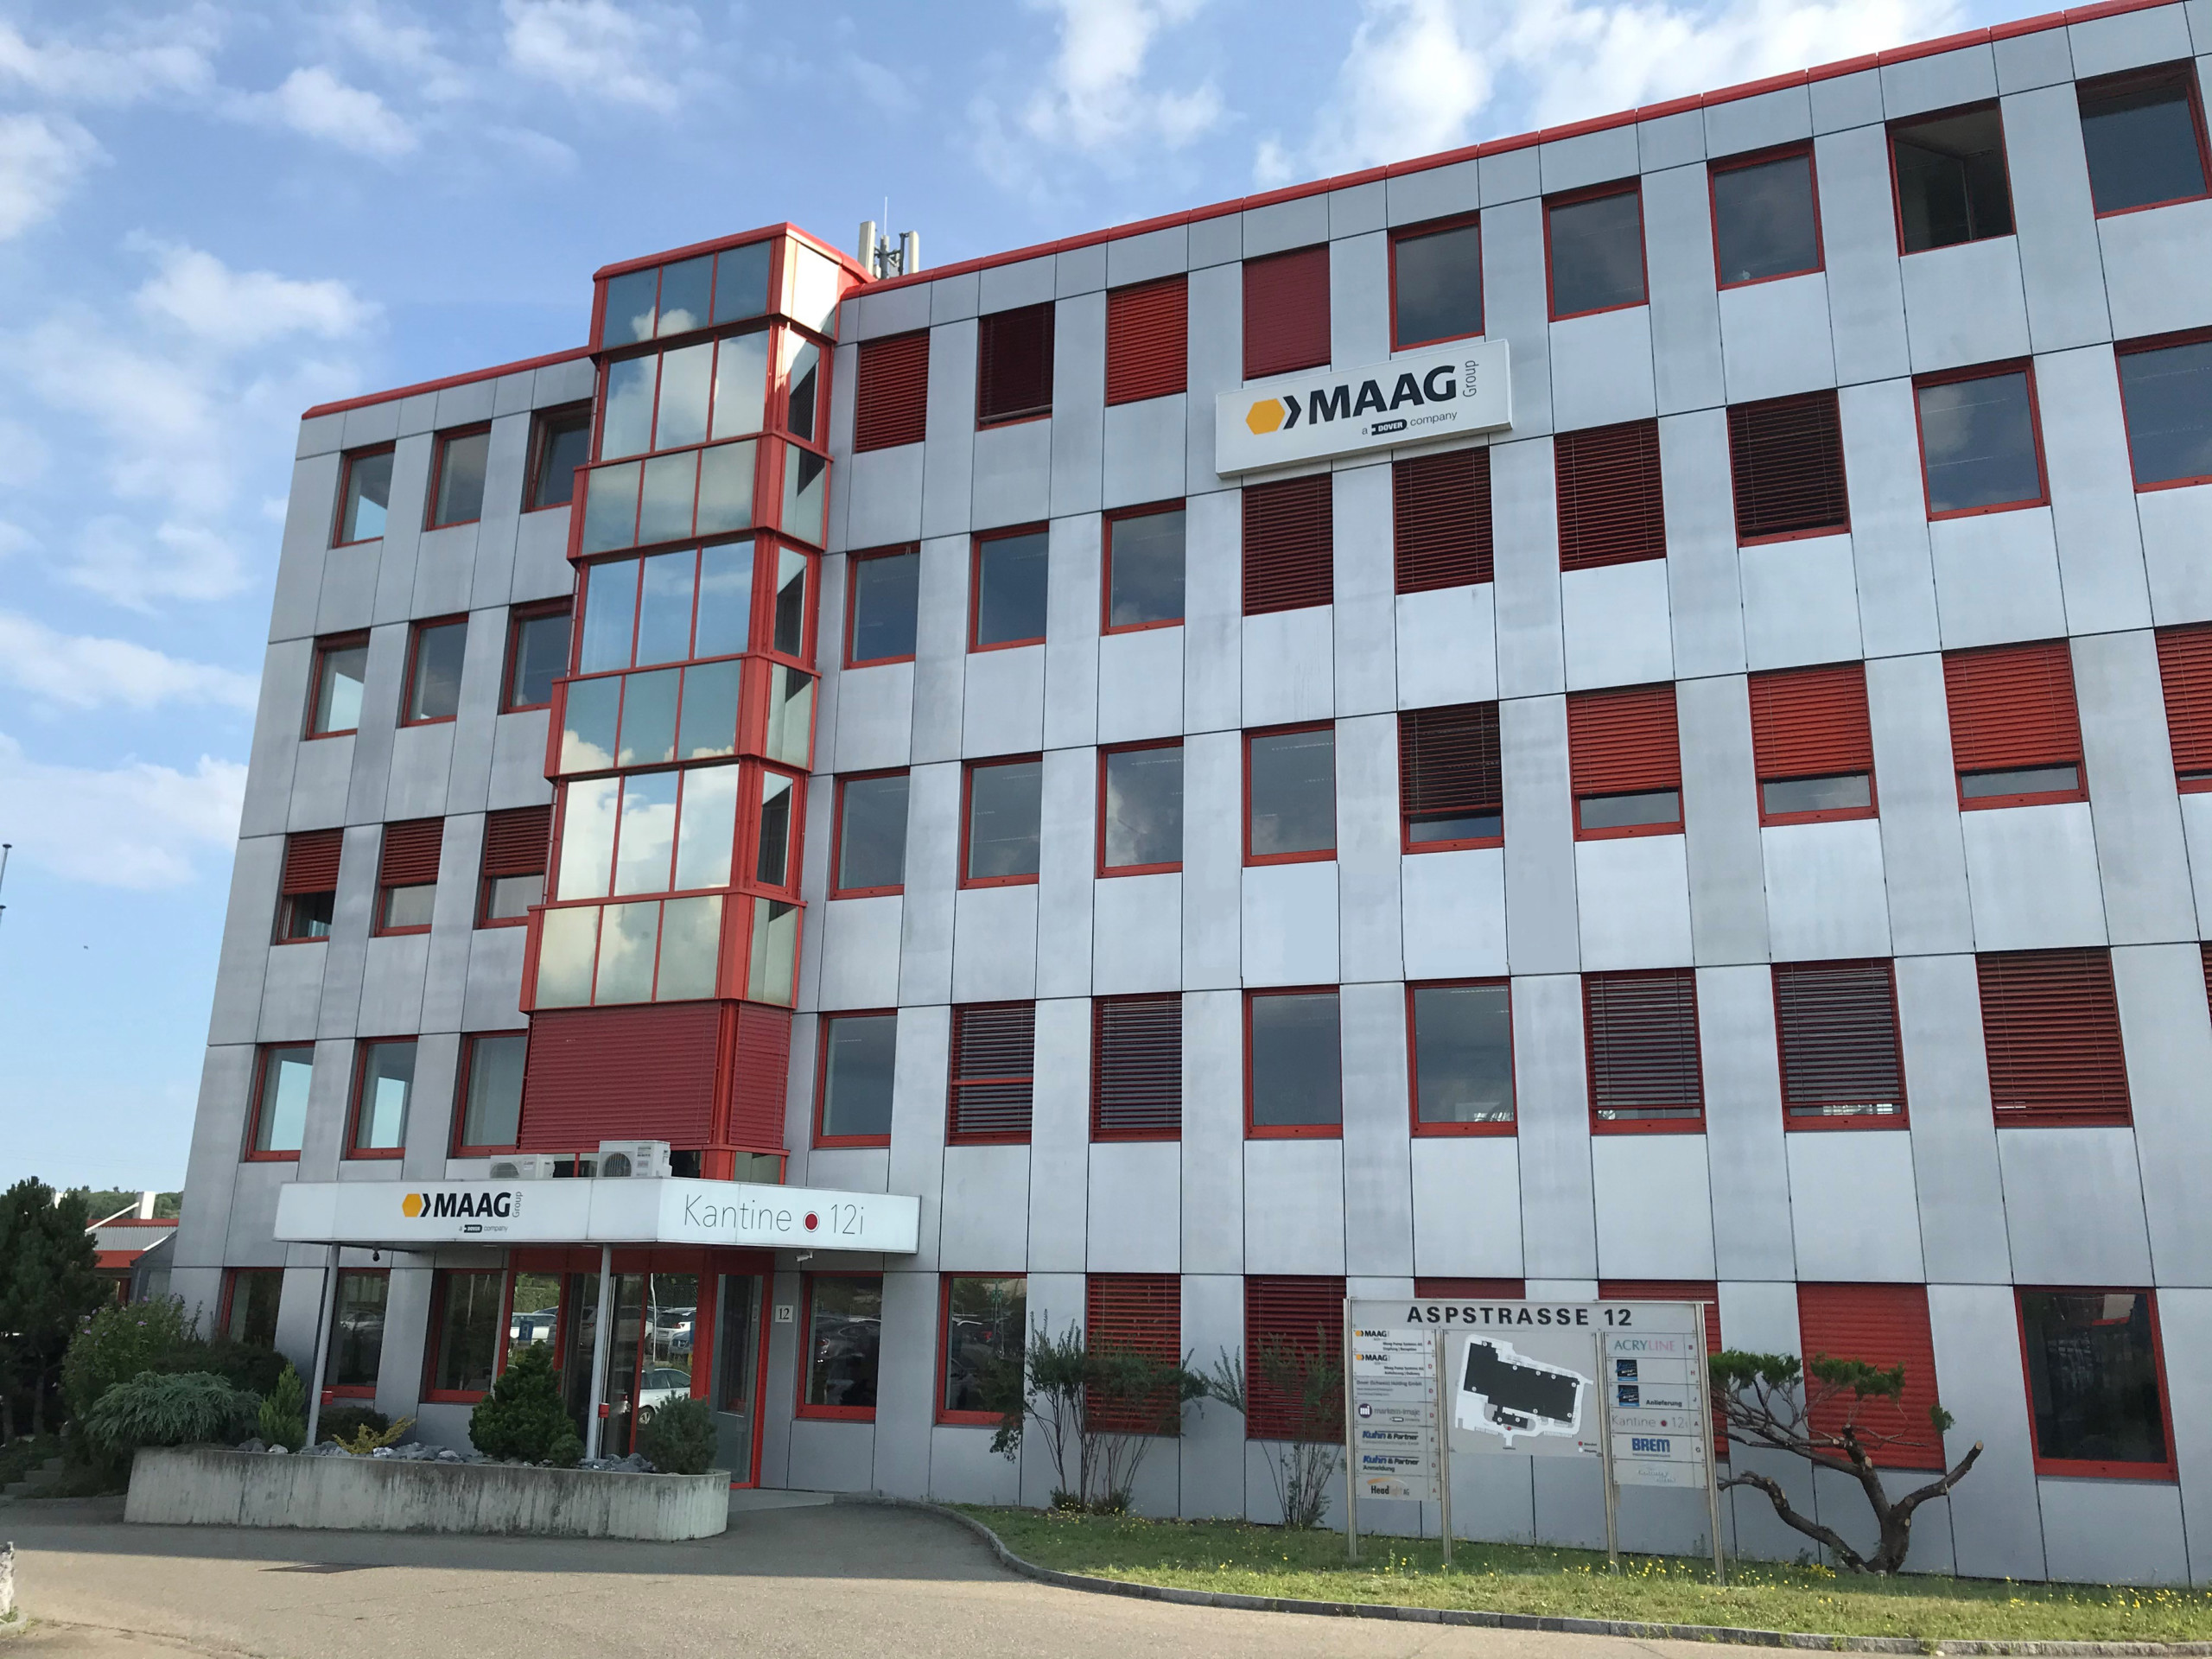 Maag Group headquarters in Switzerland